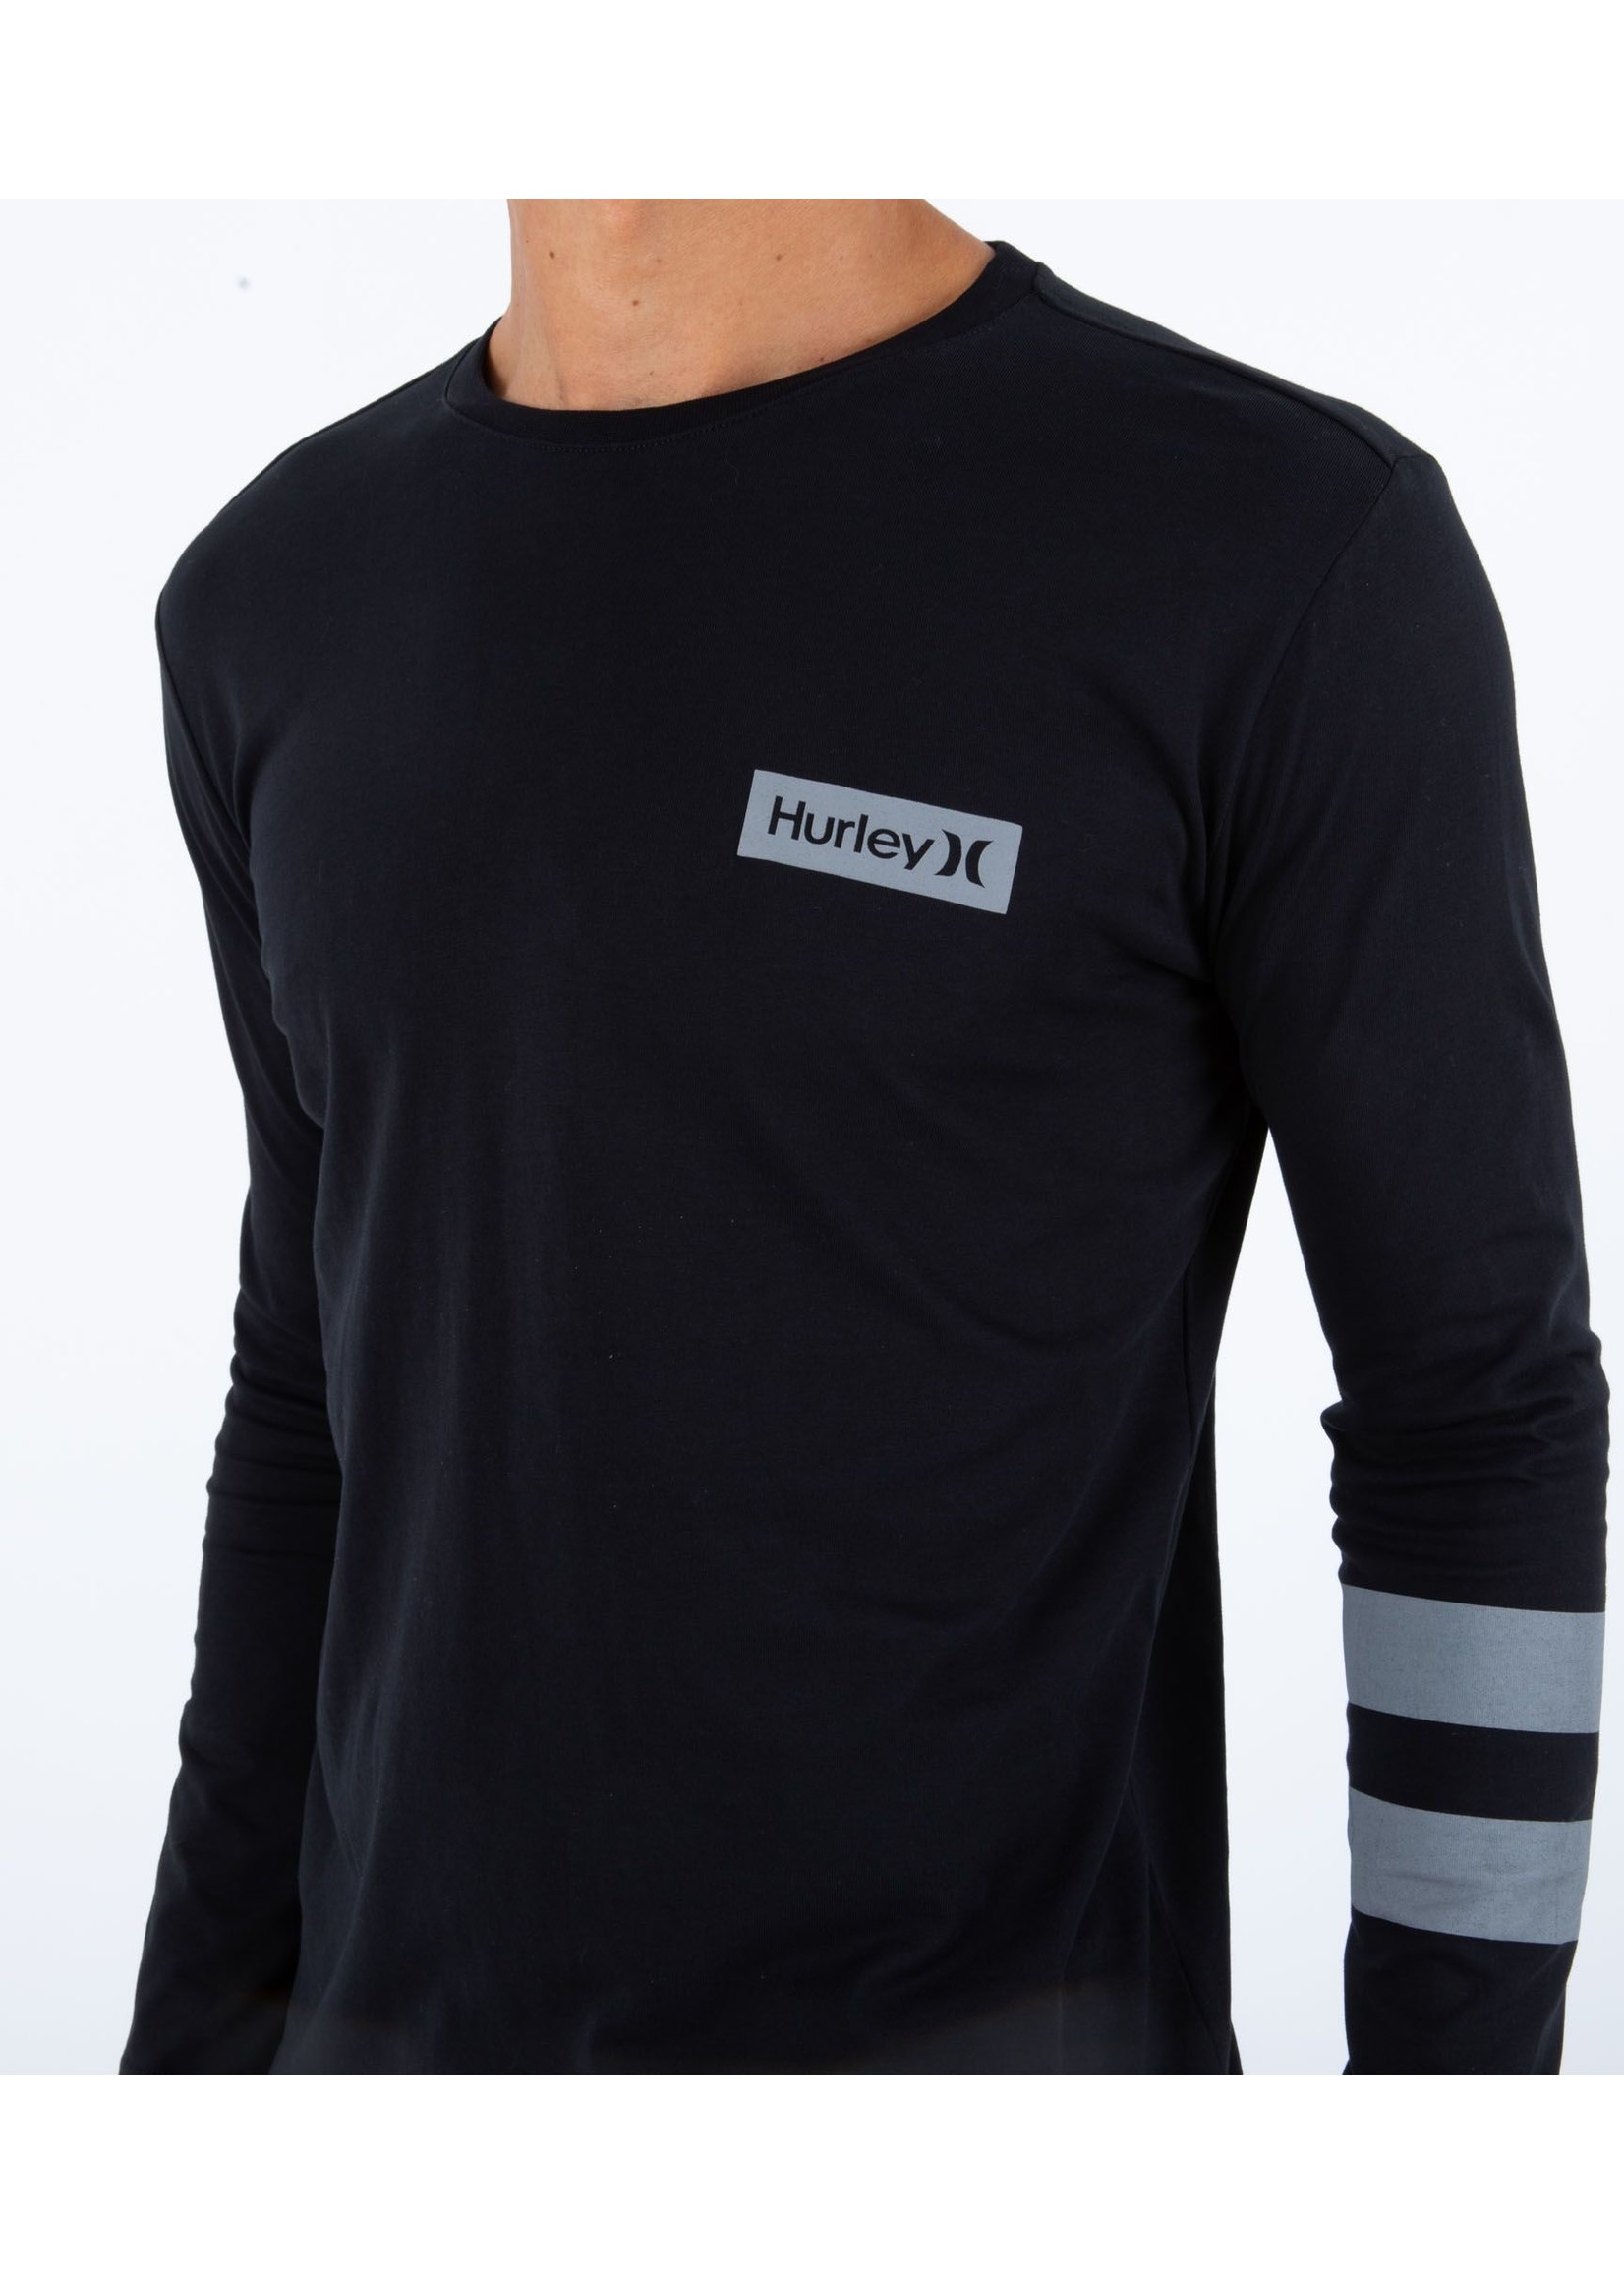 Hurley Oceancare Block Party T-Shirt Long Sleeve Black